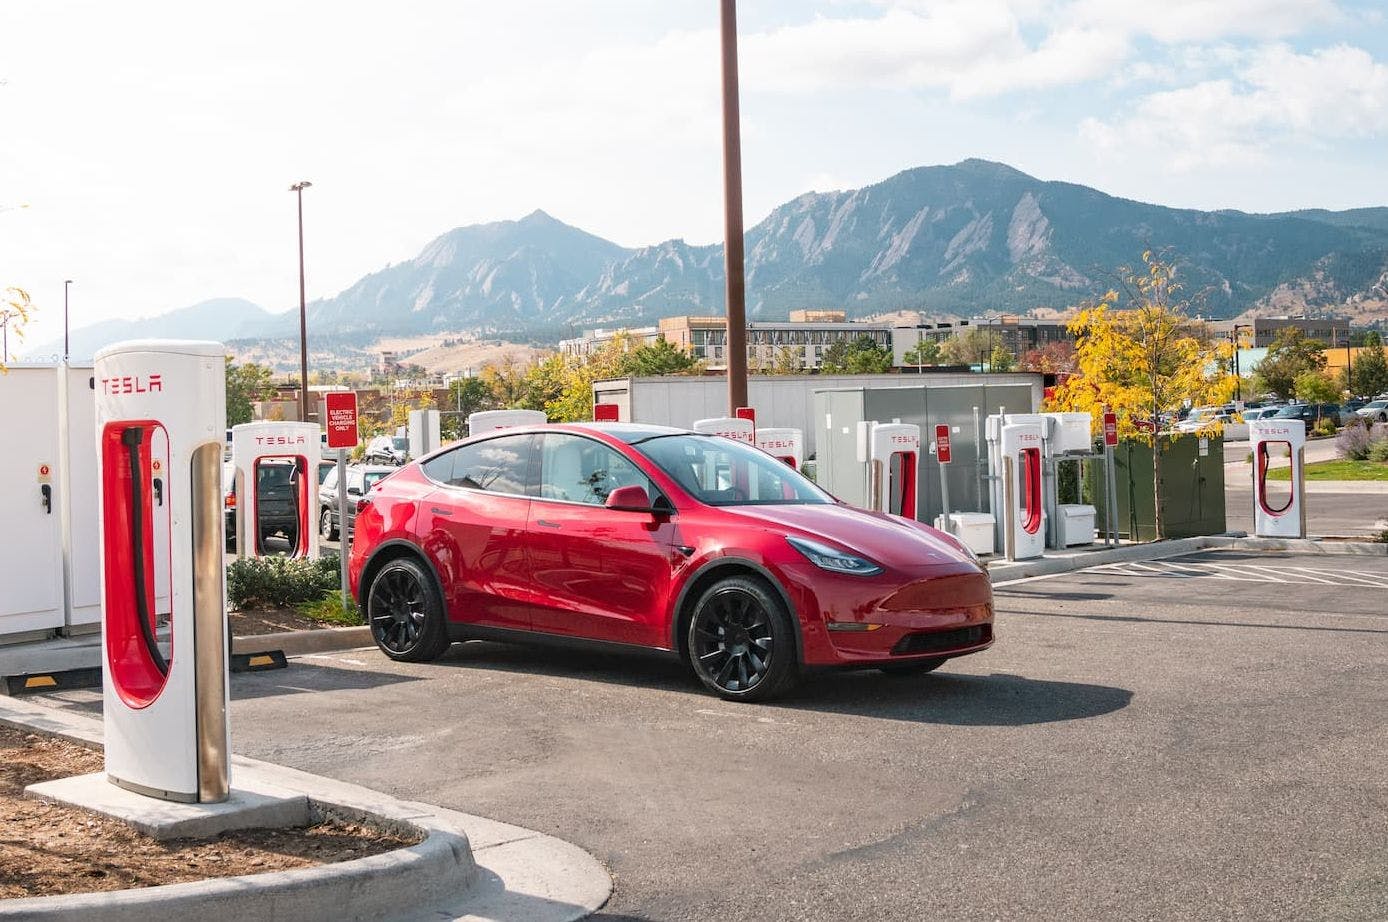 Red Tesla Model Y electric SUV charging at Supercharging station